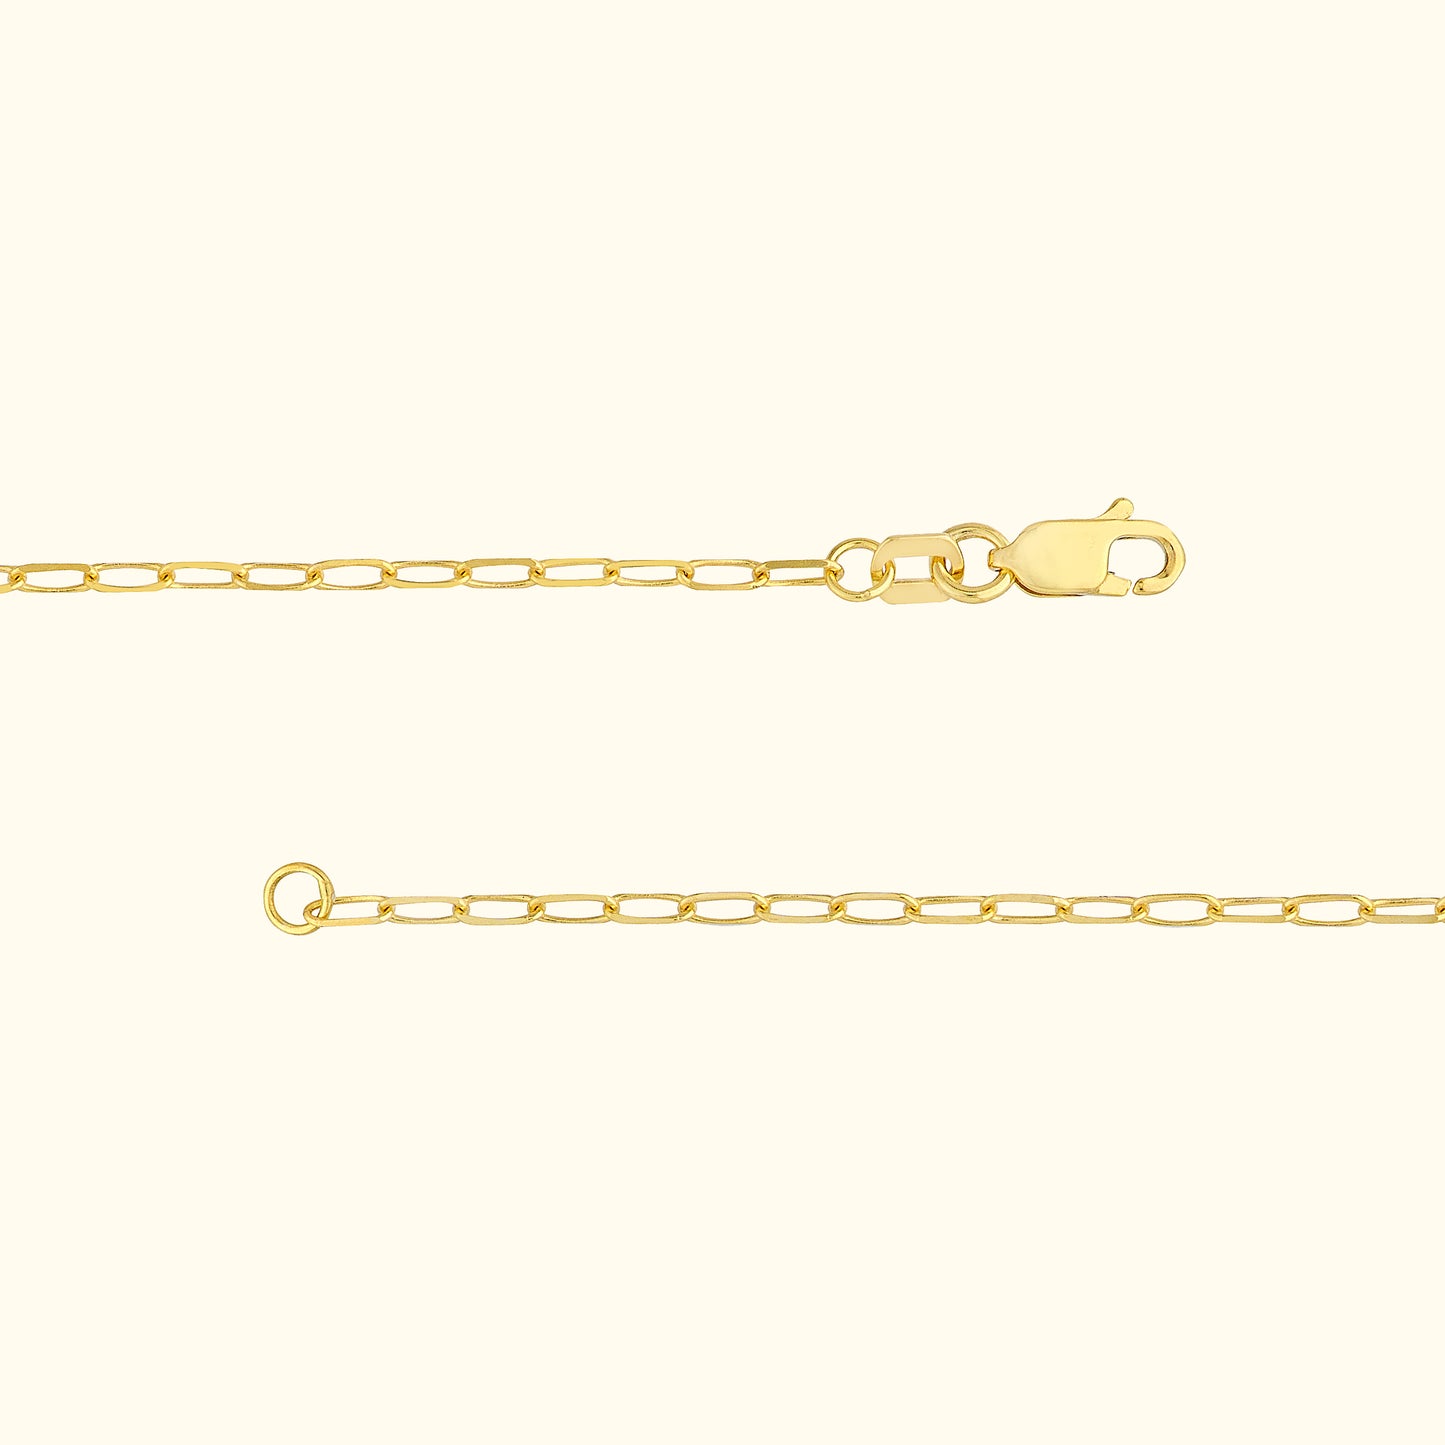 Thin Paper Clip Chain Necklace